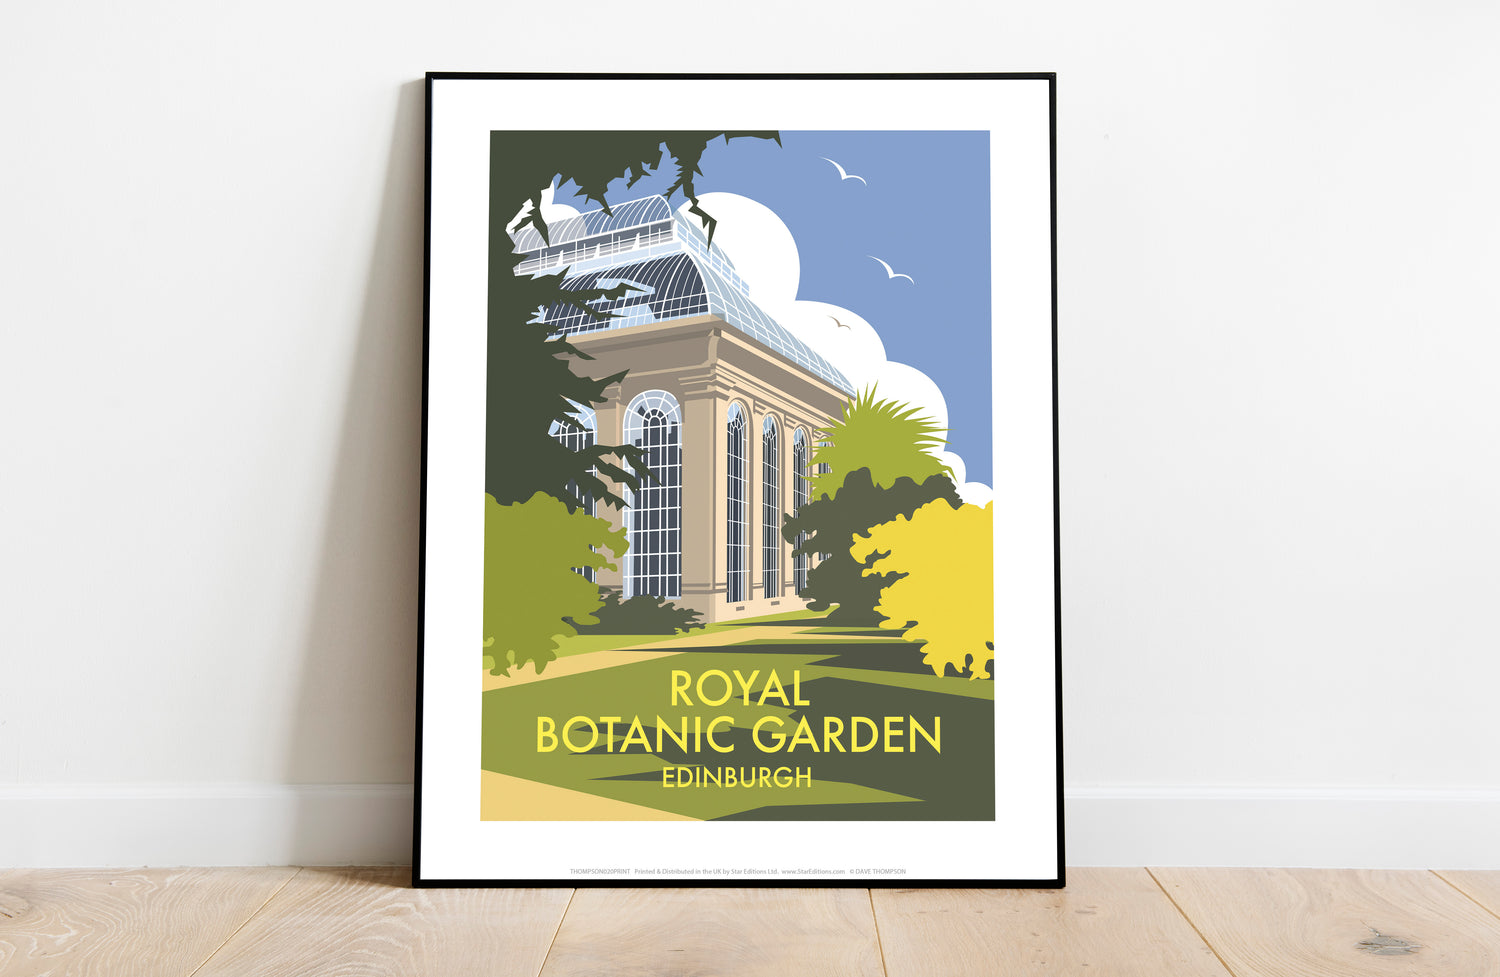 Royal Botanic Garden, Edinburgh - Art Print